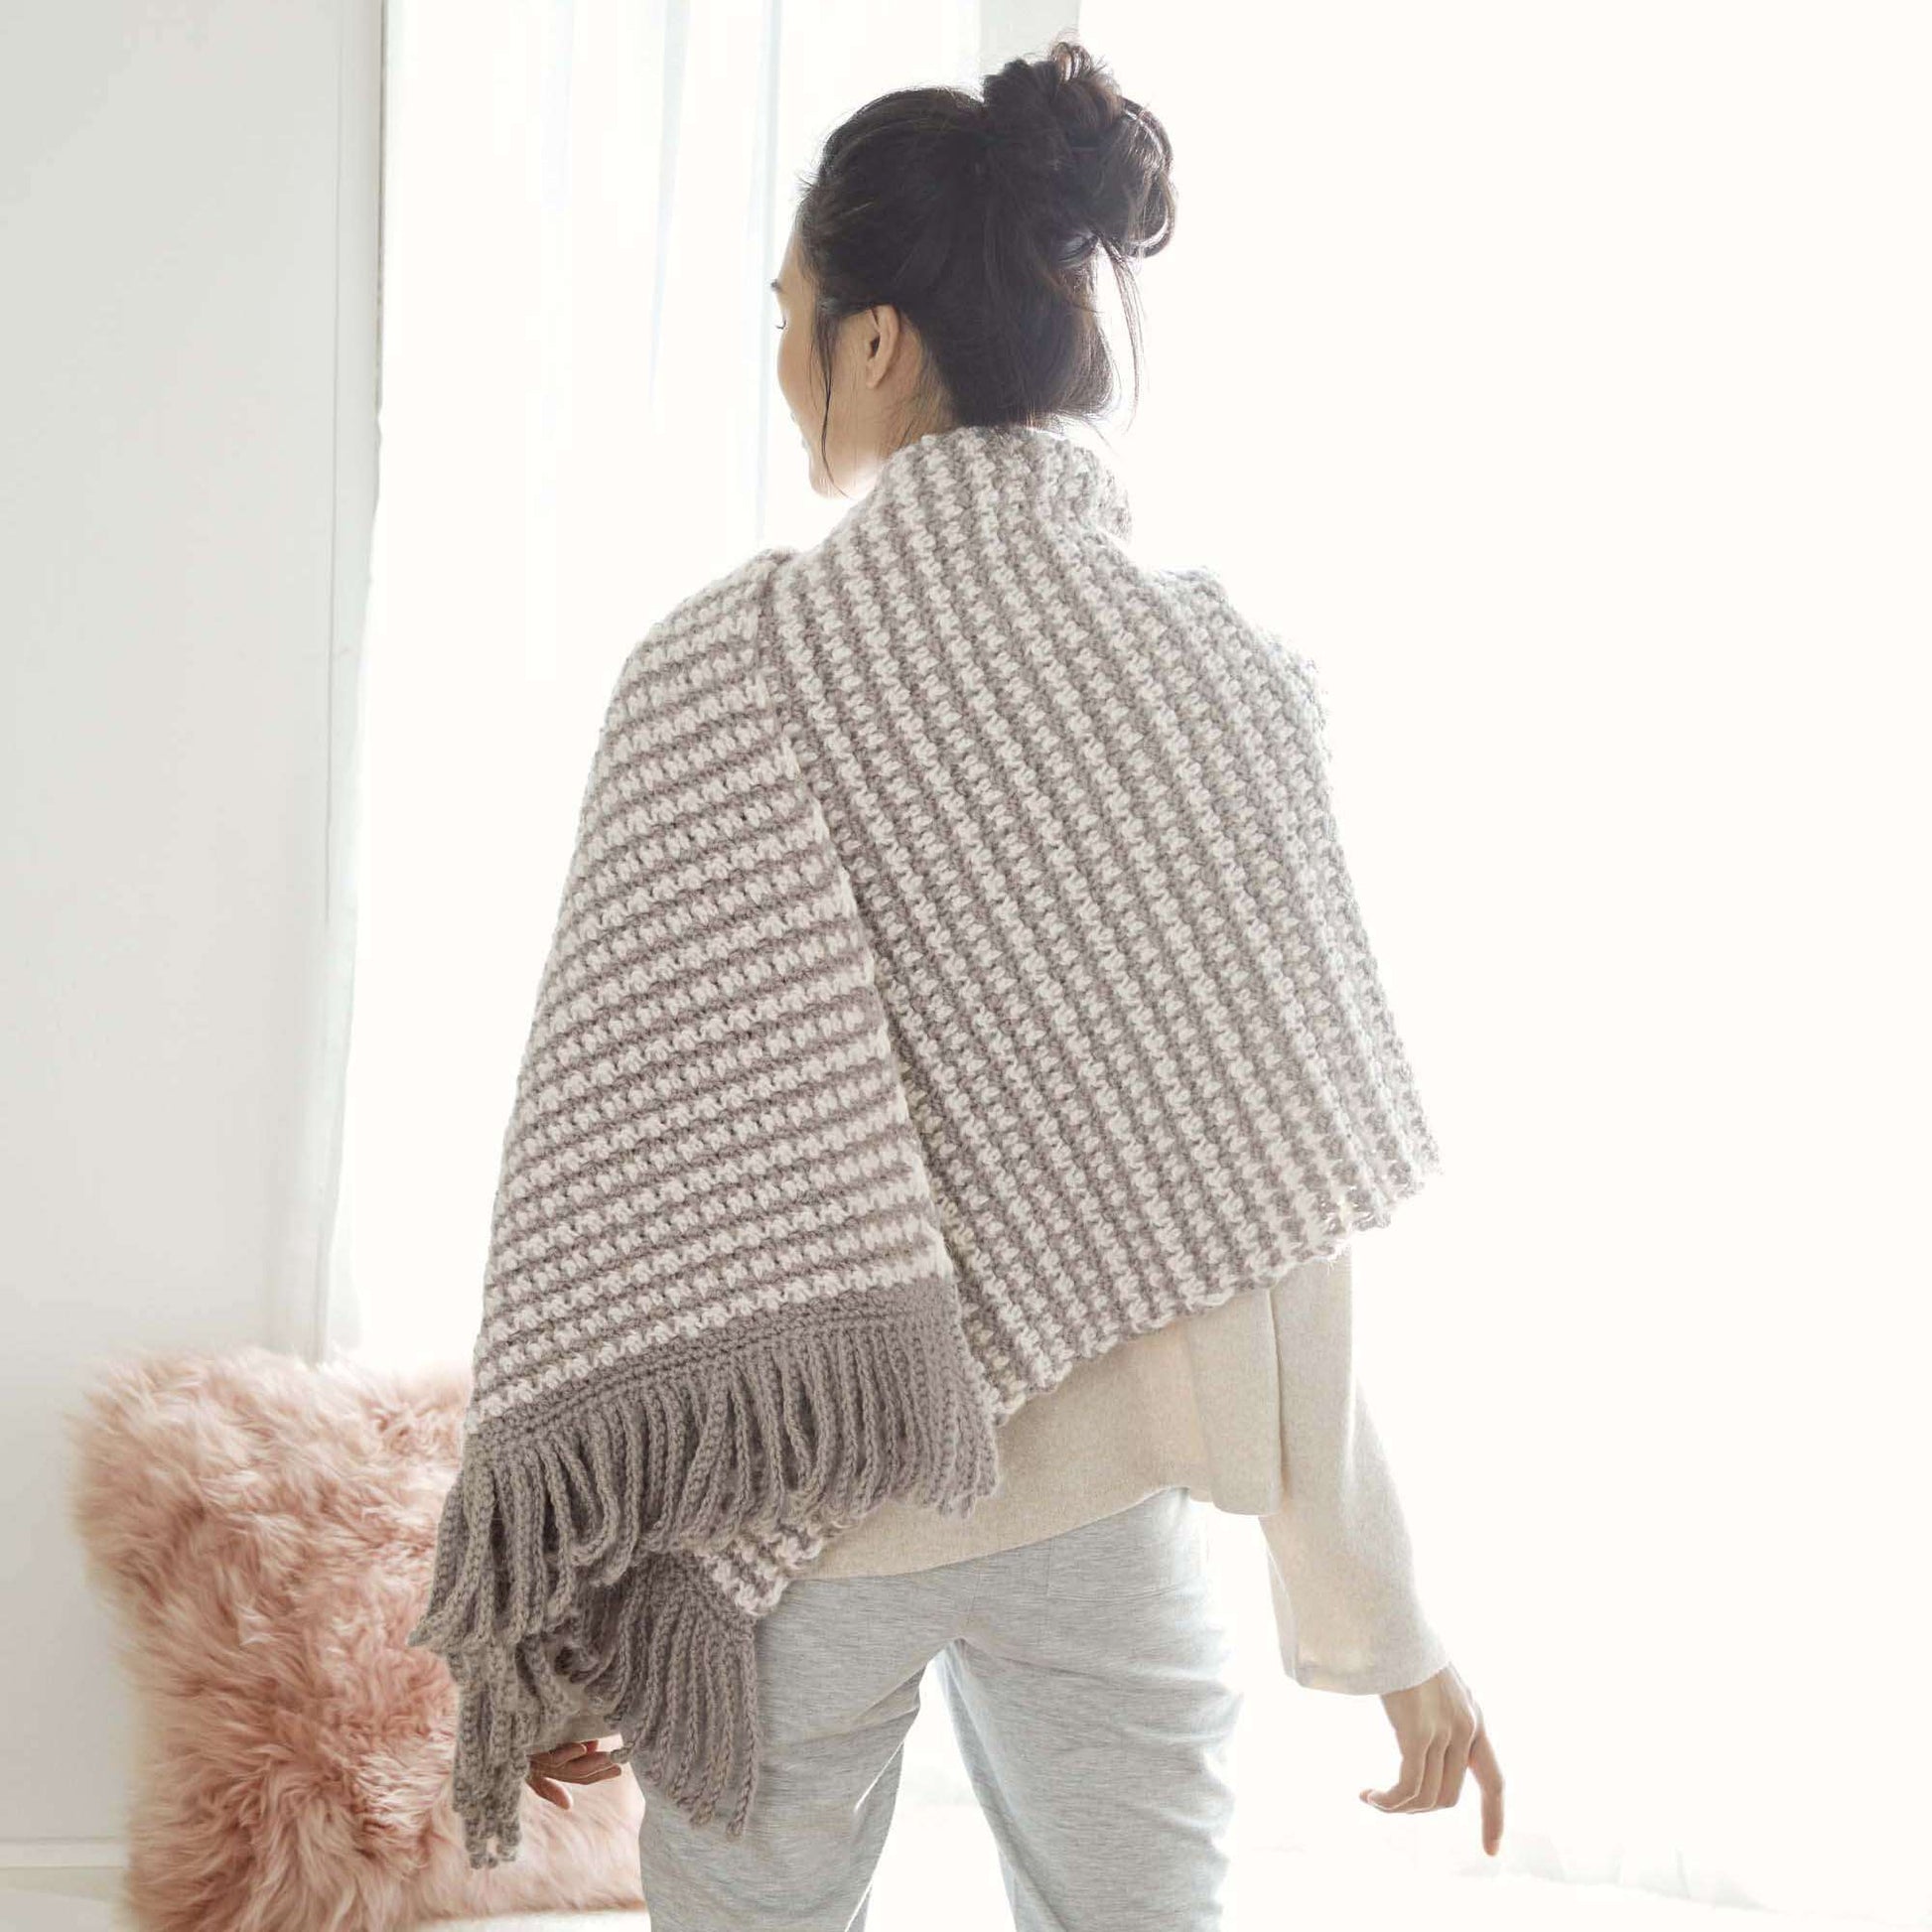 Patons Tweed Crochet Shawl Single Size